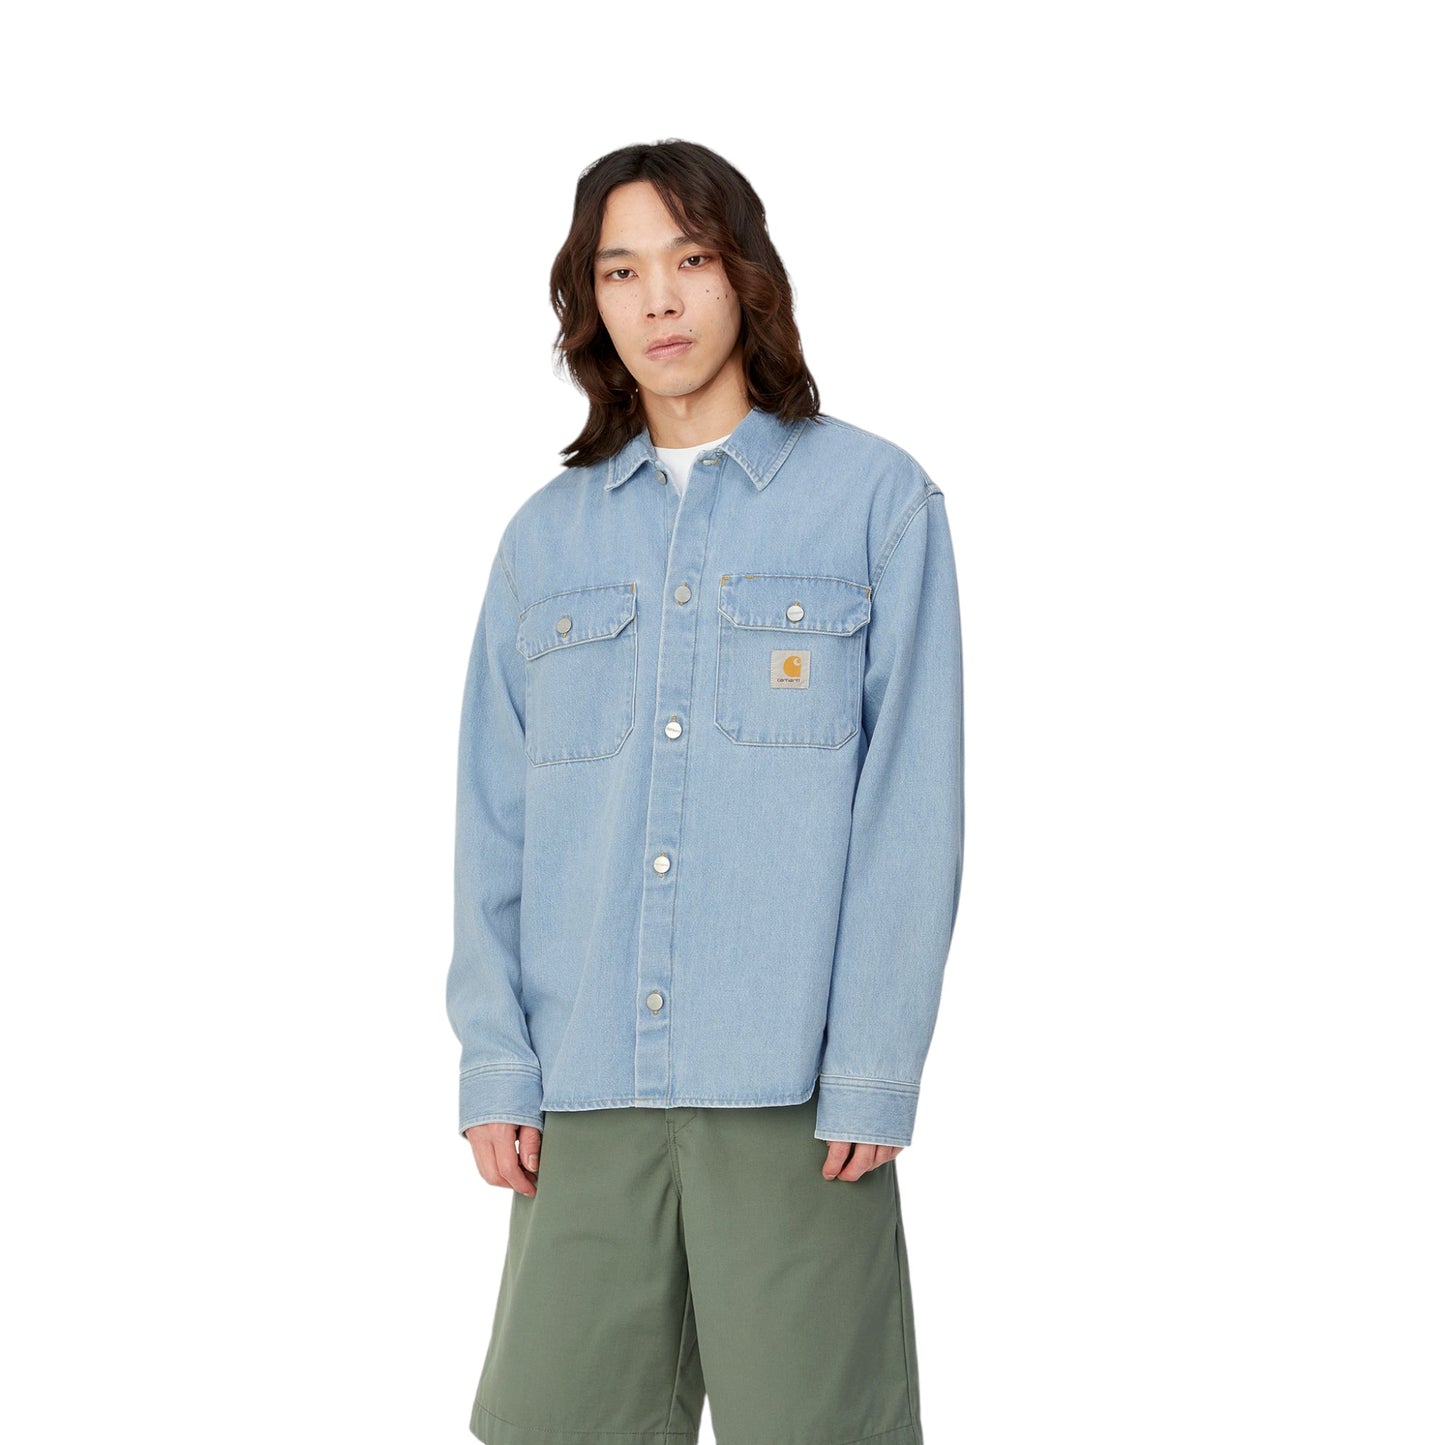 Carhartt Wip Harvey Shirt Jacket - Blue Stone Bleached - Francis Concept